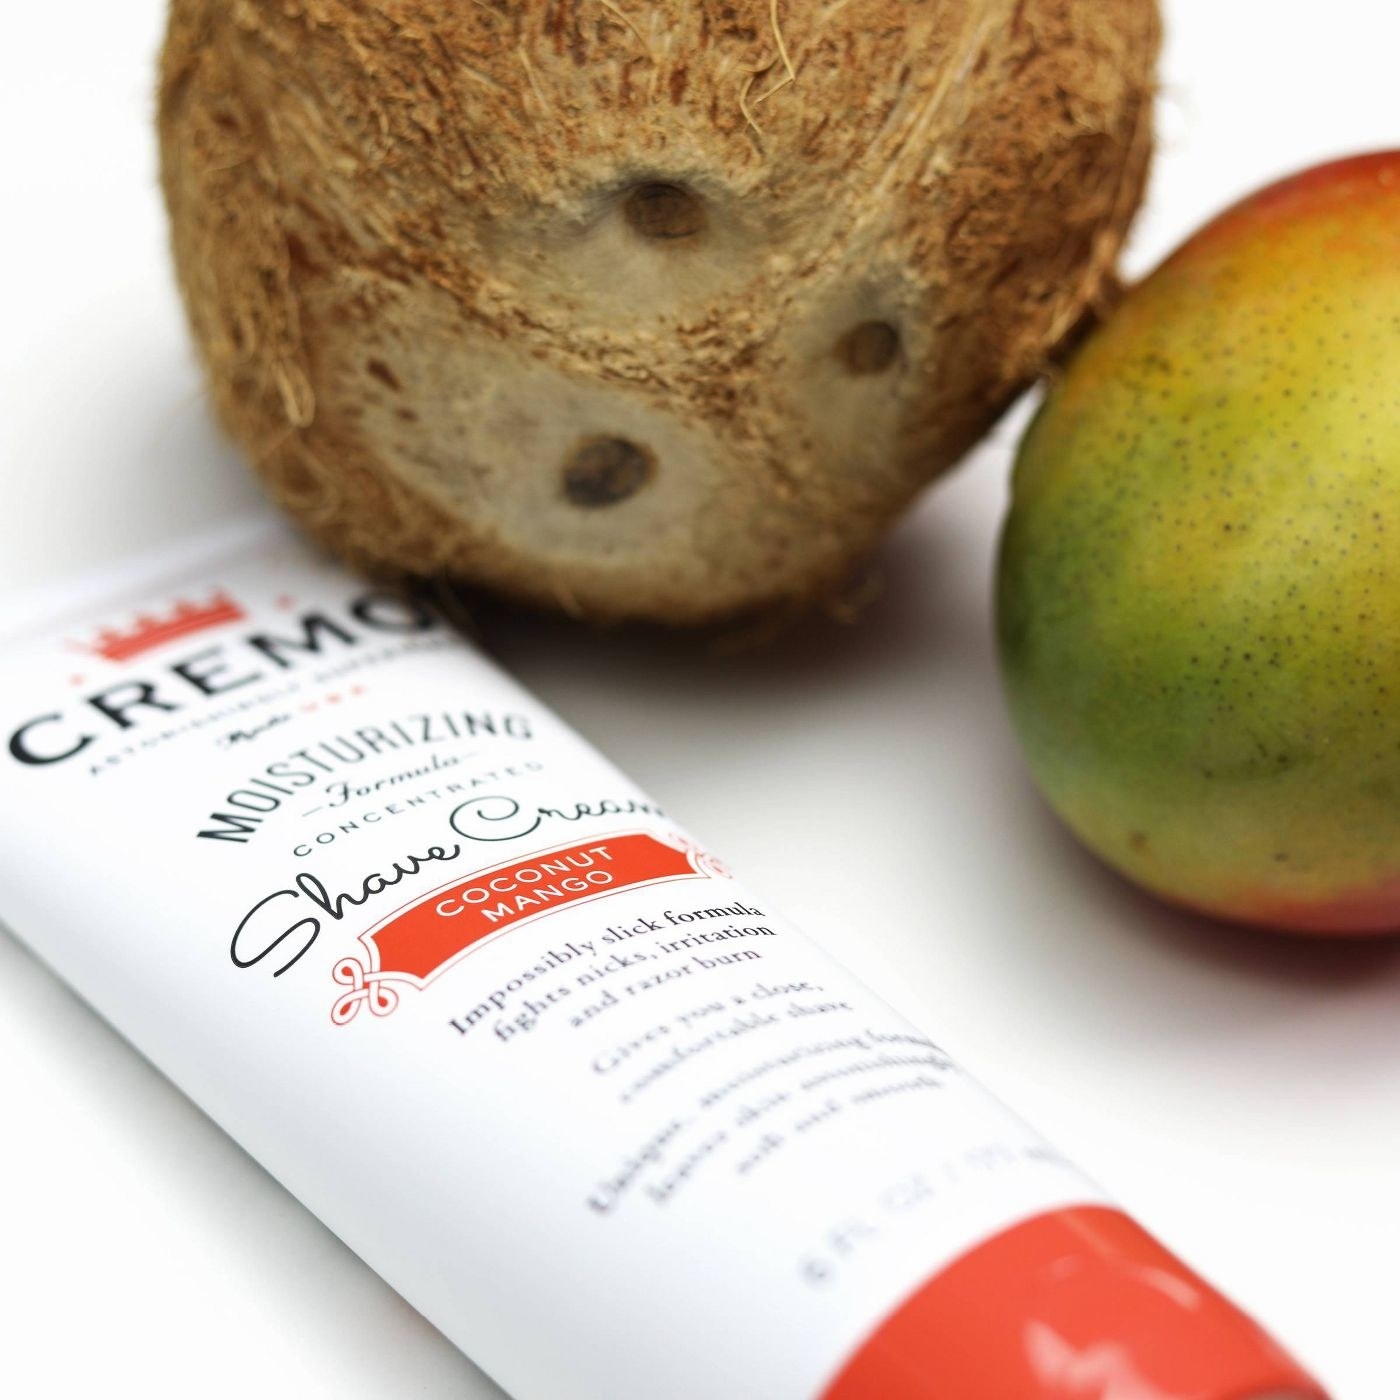 The shaving cream beside a coconut and mango